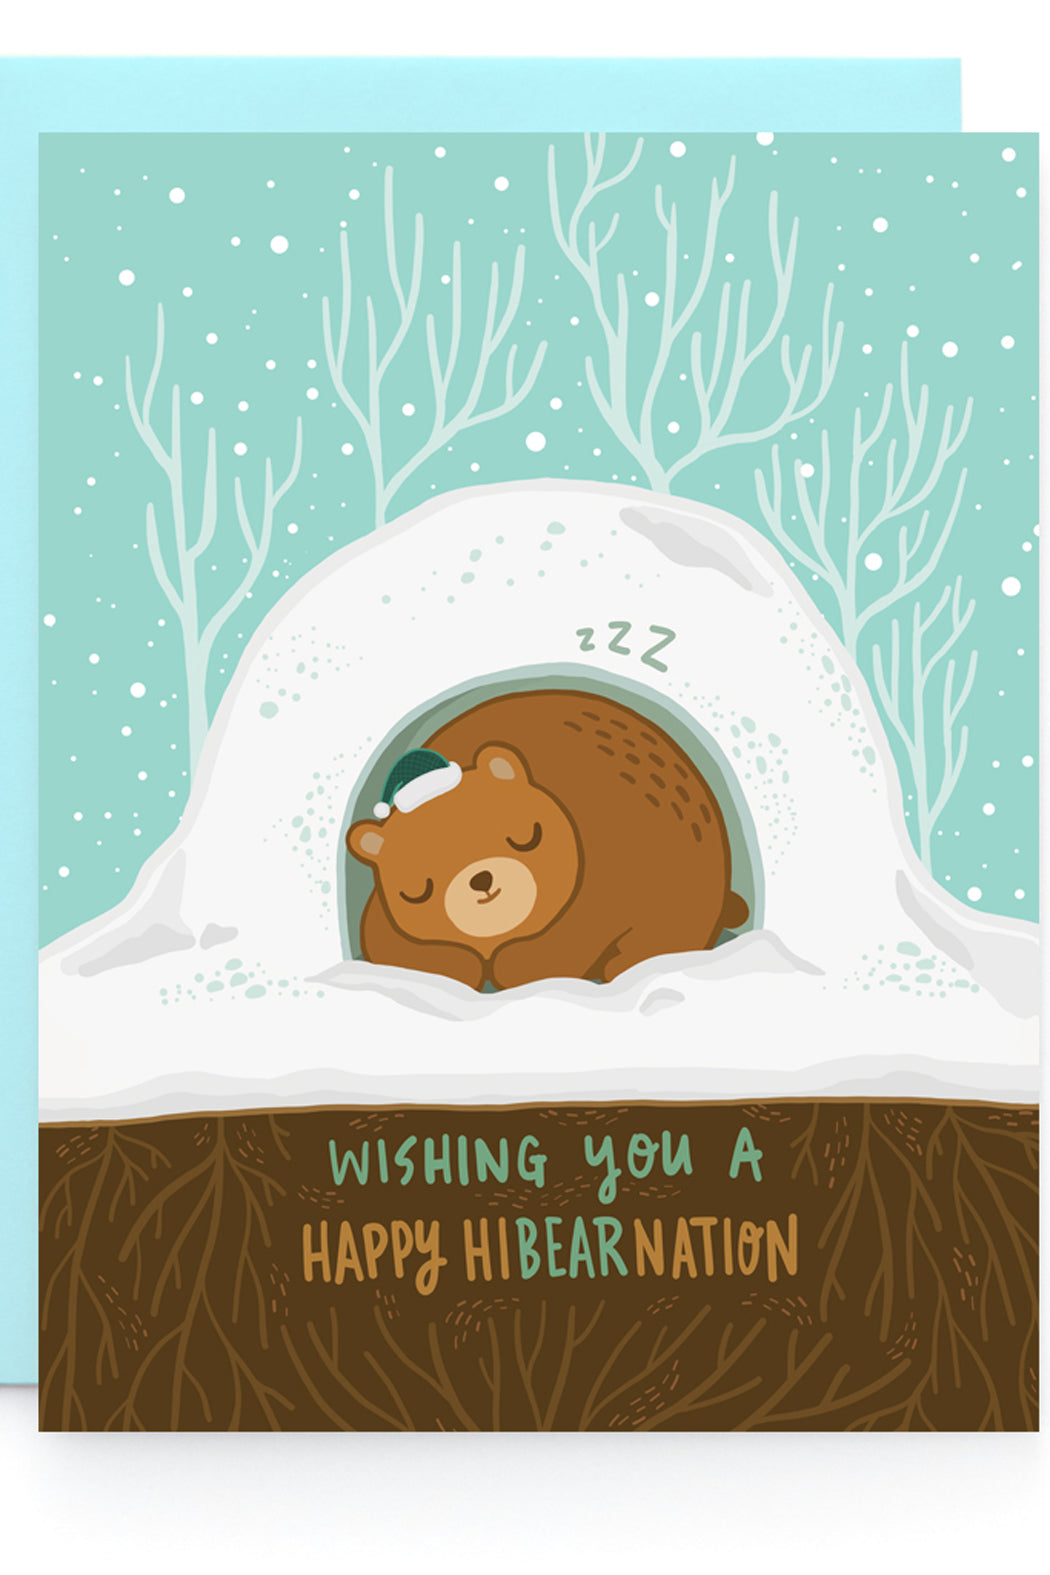 Happy Hibernation